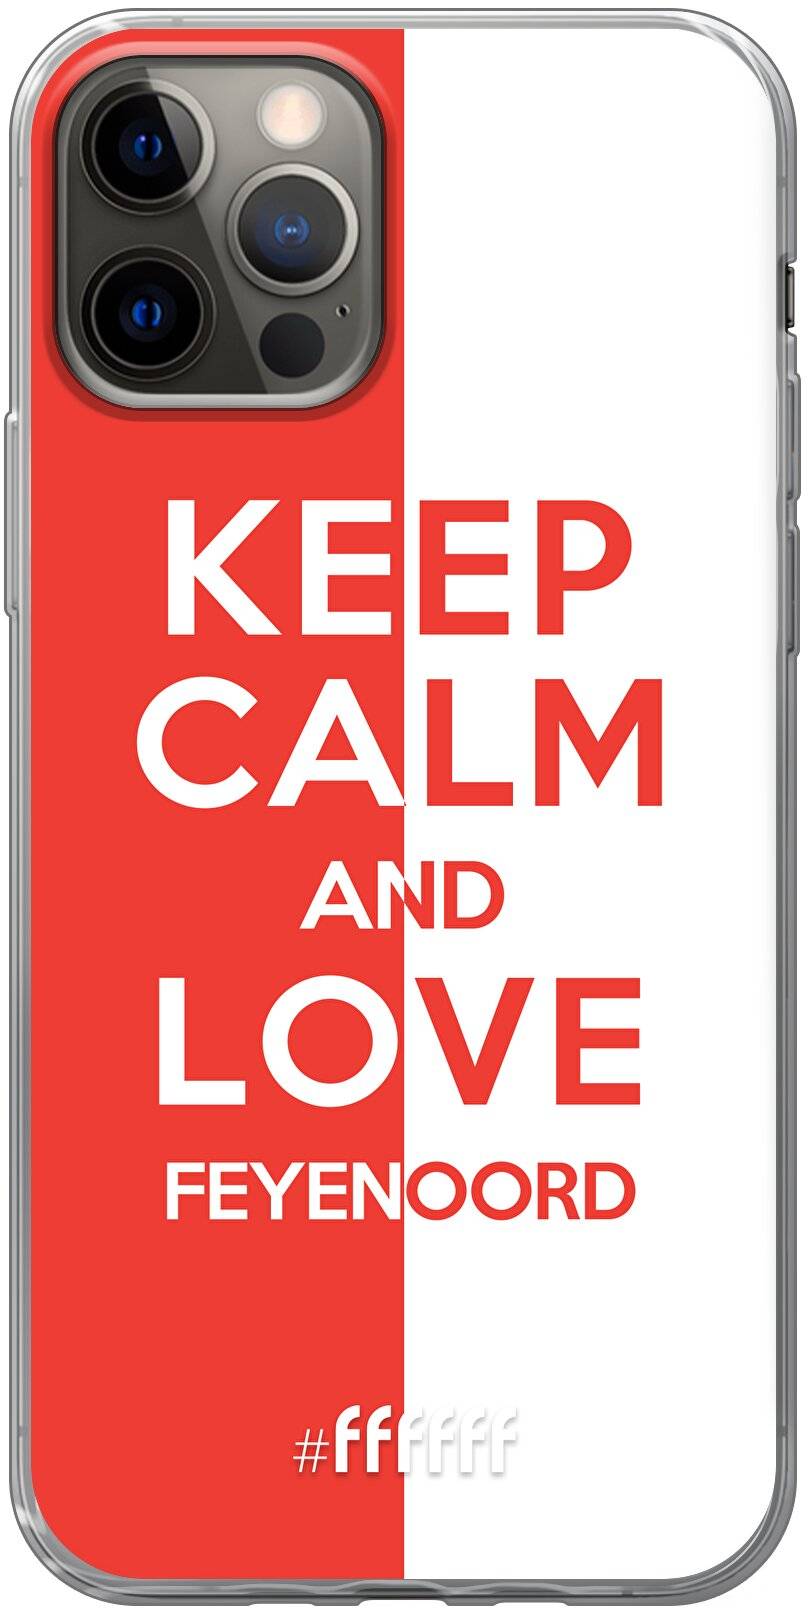 Feyenoord - Keep calm iPhone 12 Pro